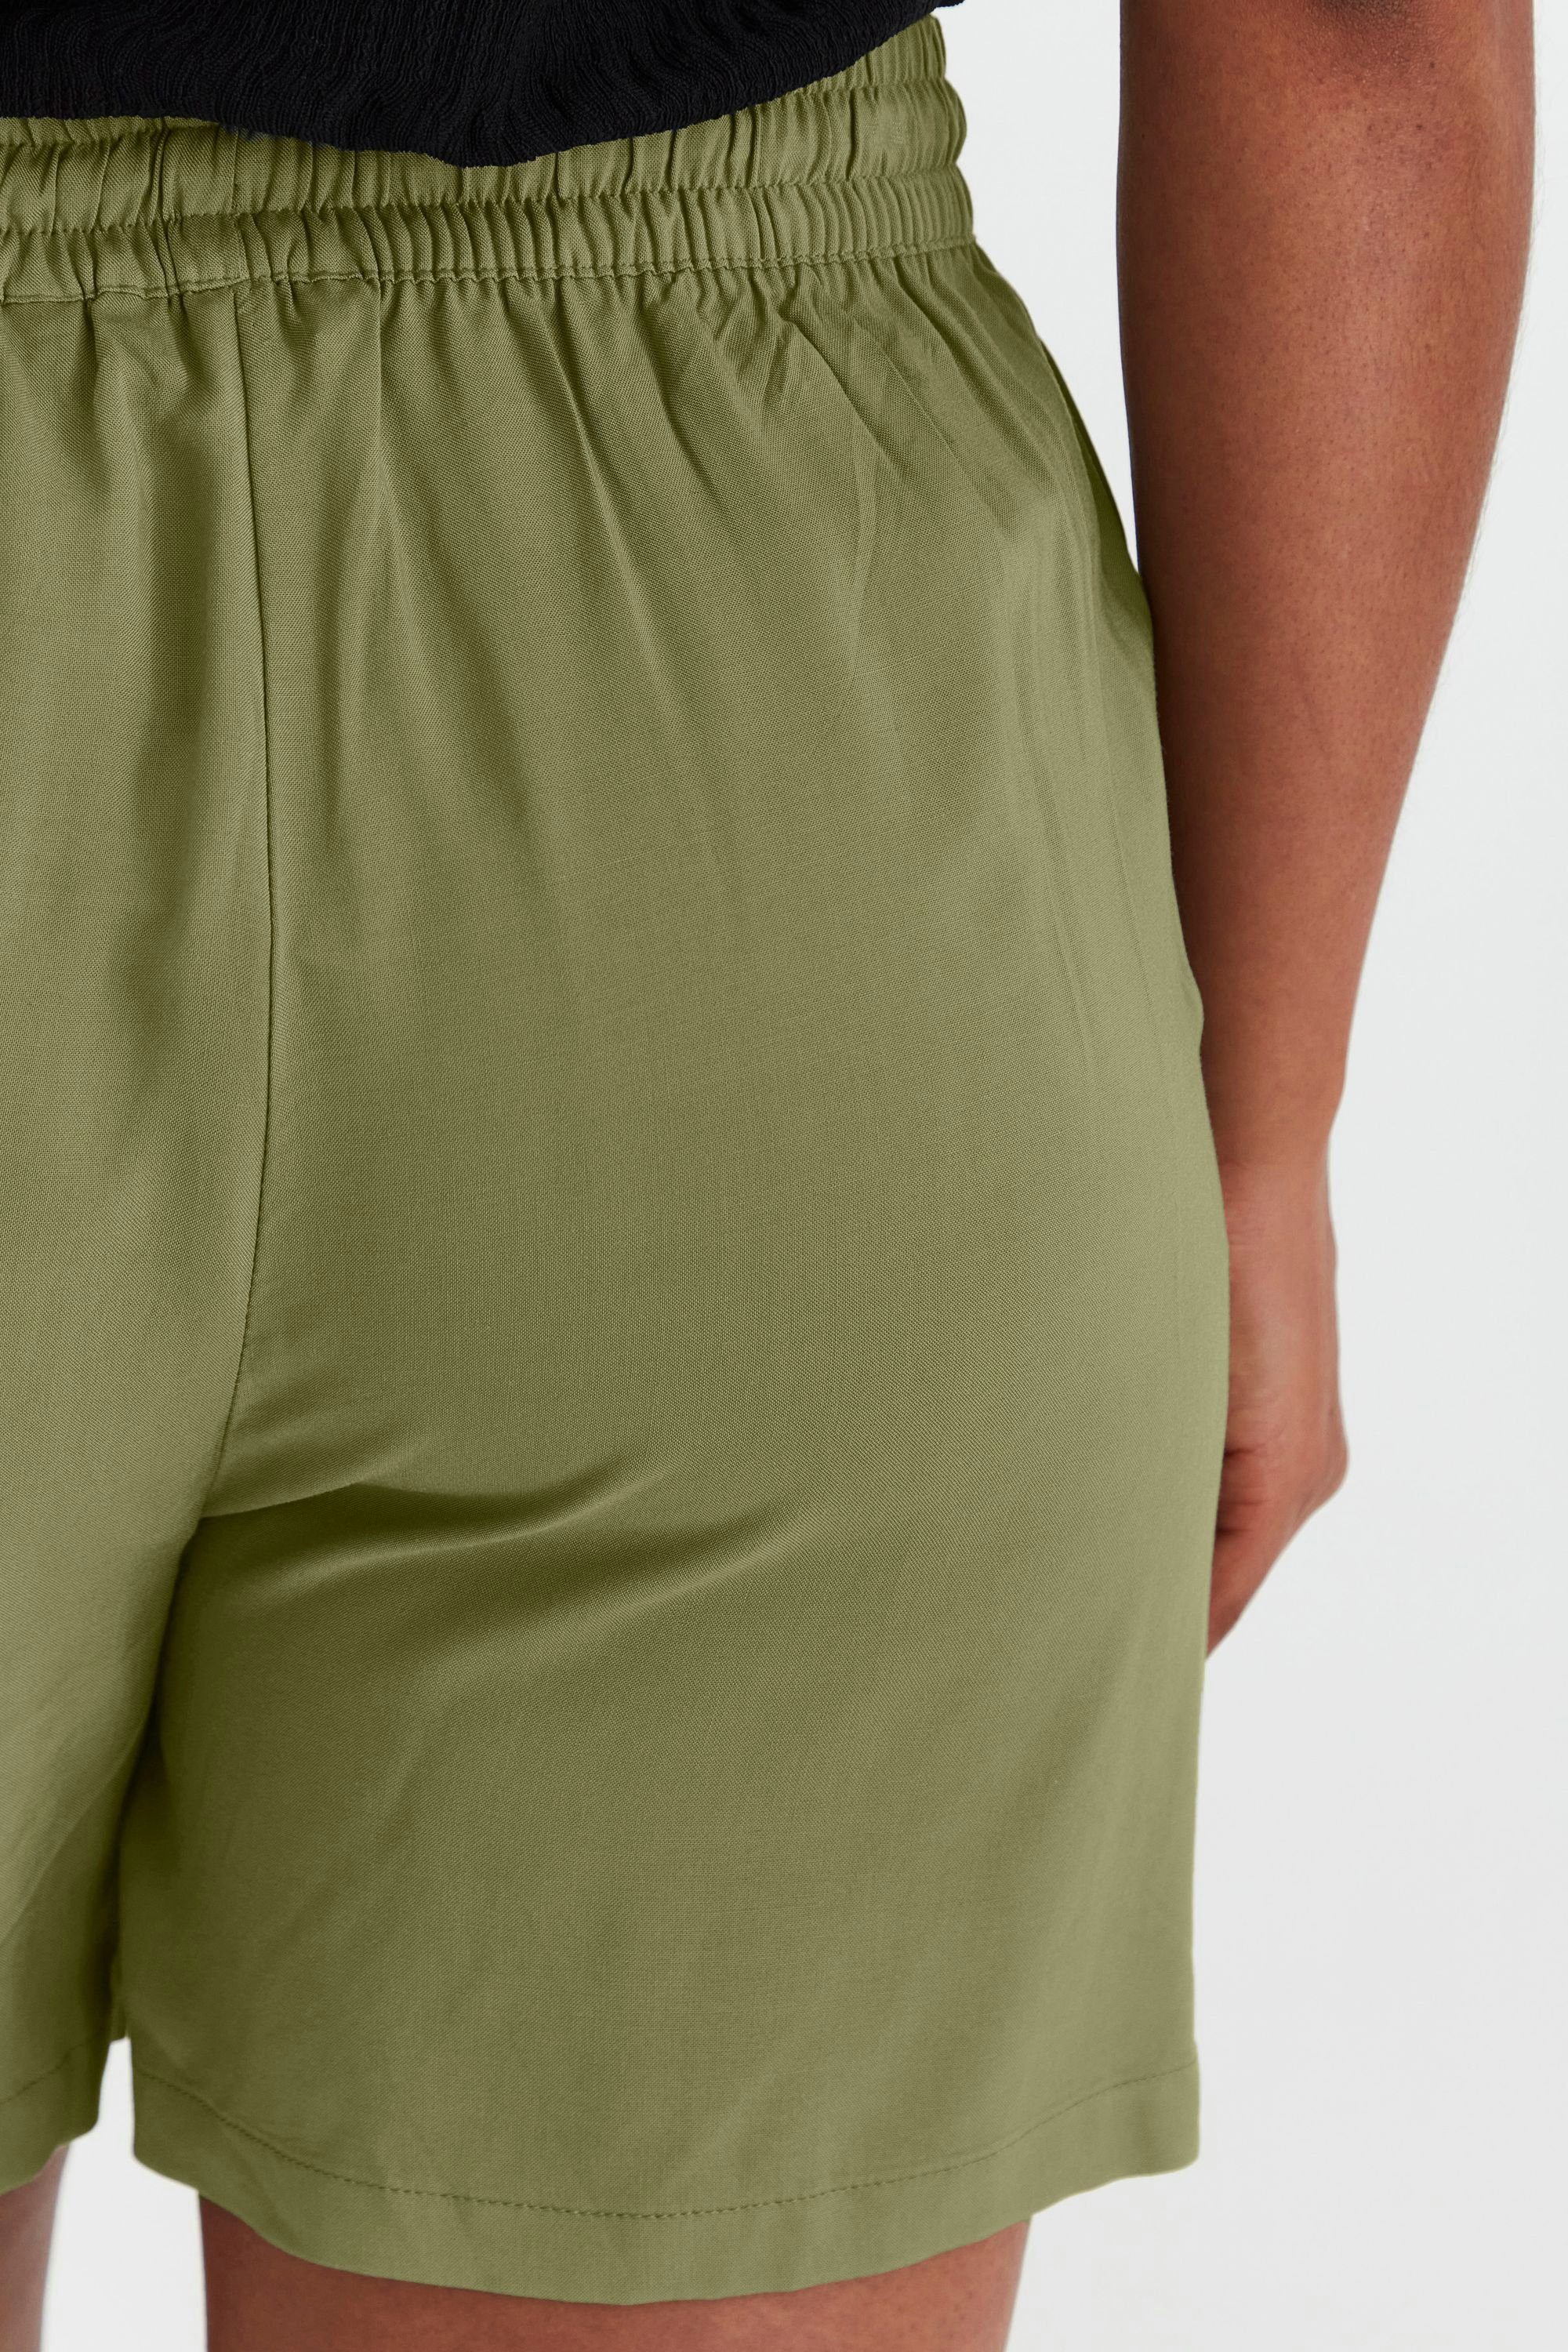 Oil Shorts Green SHORTS Shorts - BYMMJOELLA (170115) Muster 20809730 Luftige b.young mit